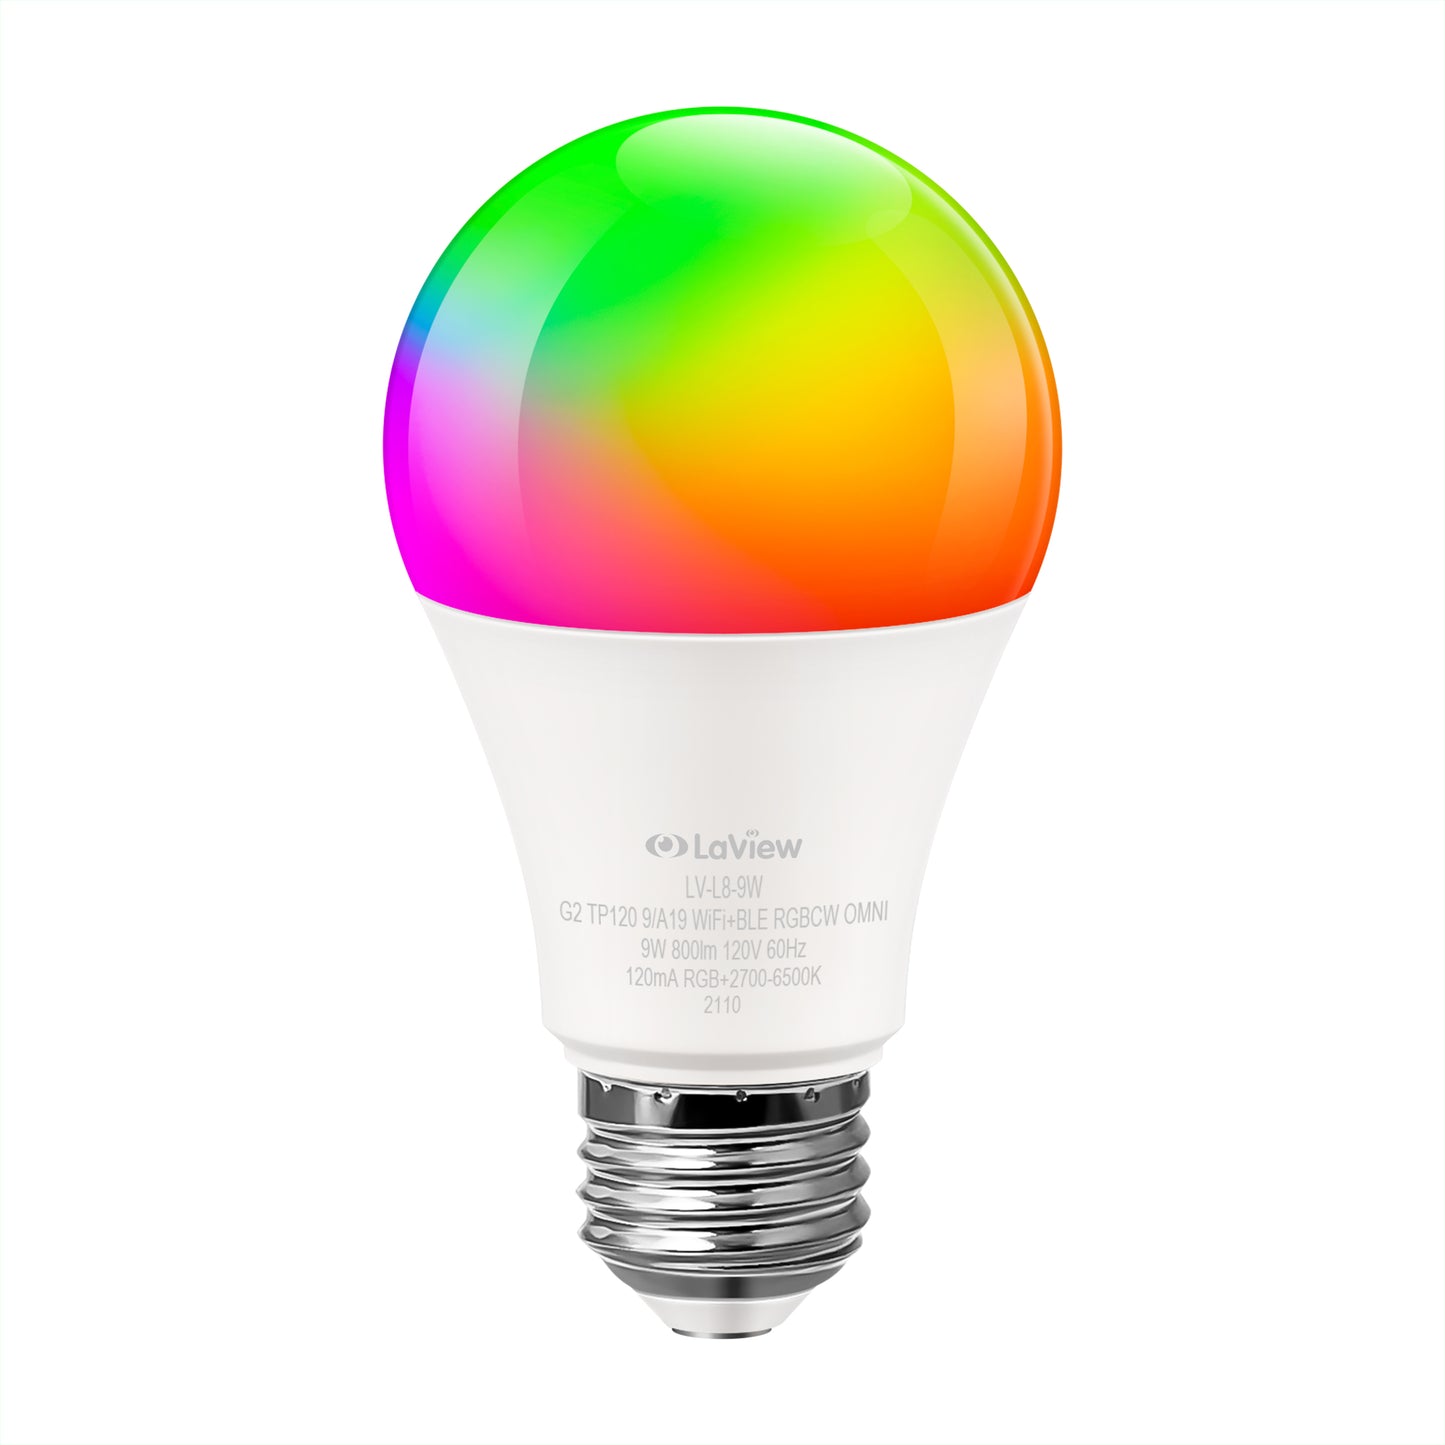 L8 Smart Light bulbs